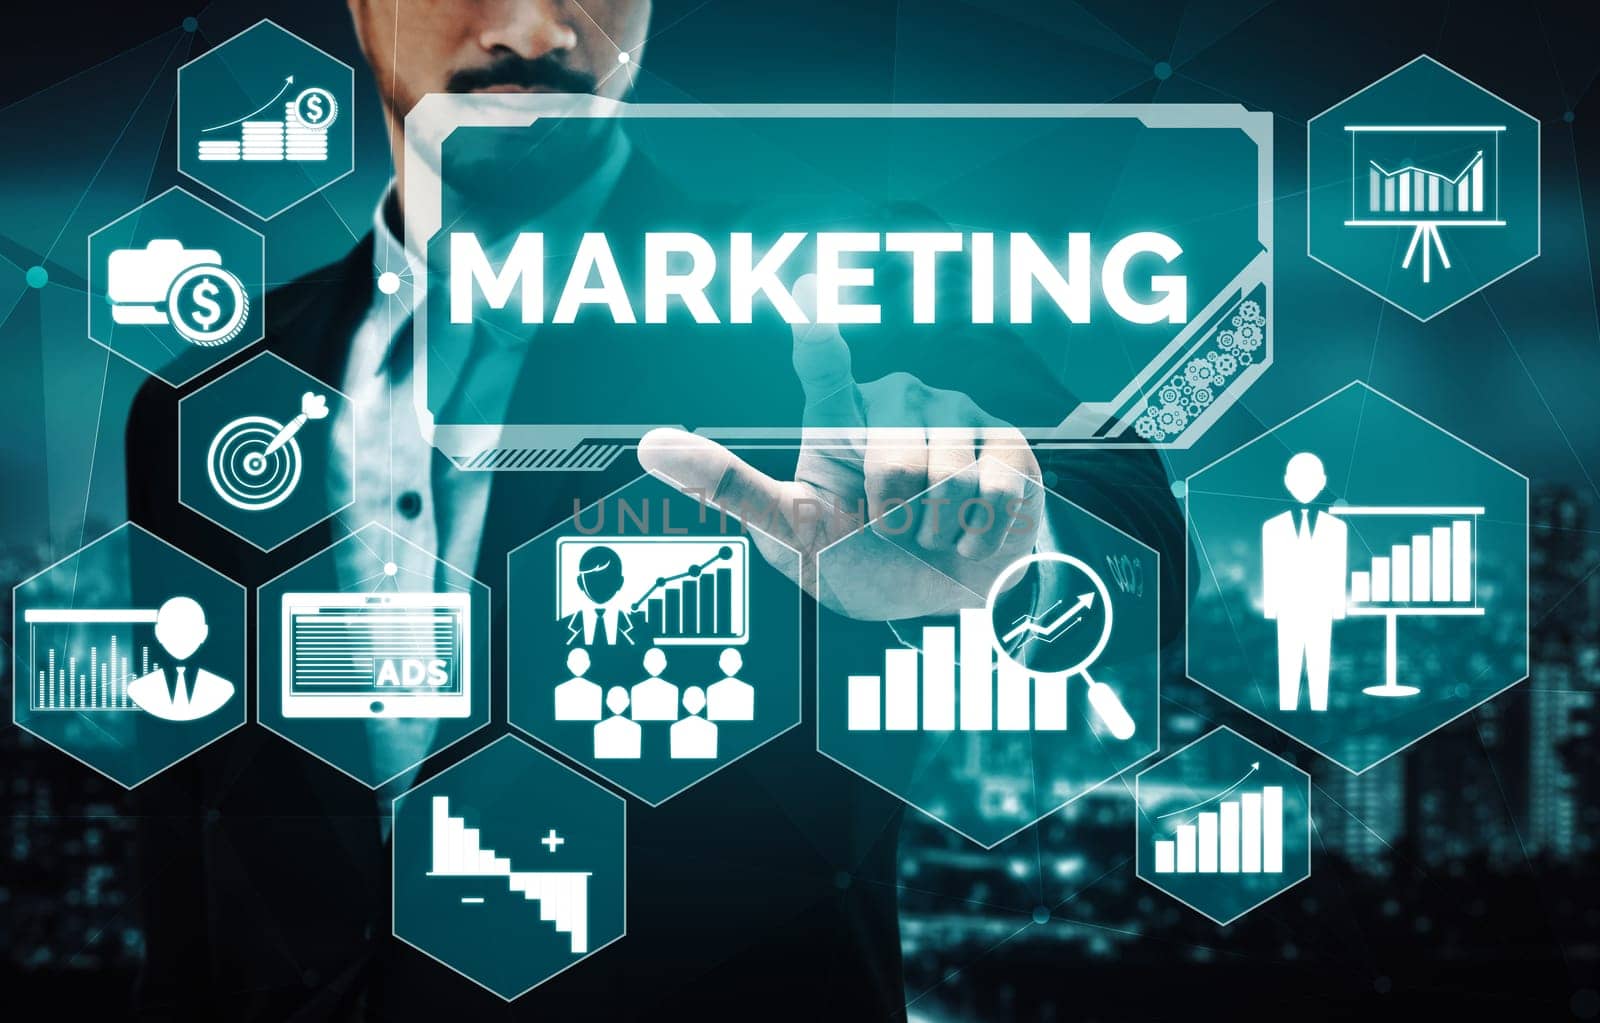 Digital Marketing Technology Solution for Online Business Concept - Graphic interface showing analytic diagram of online market promotion strategy on digital advertising platform via social media. uds